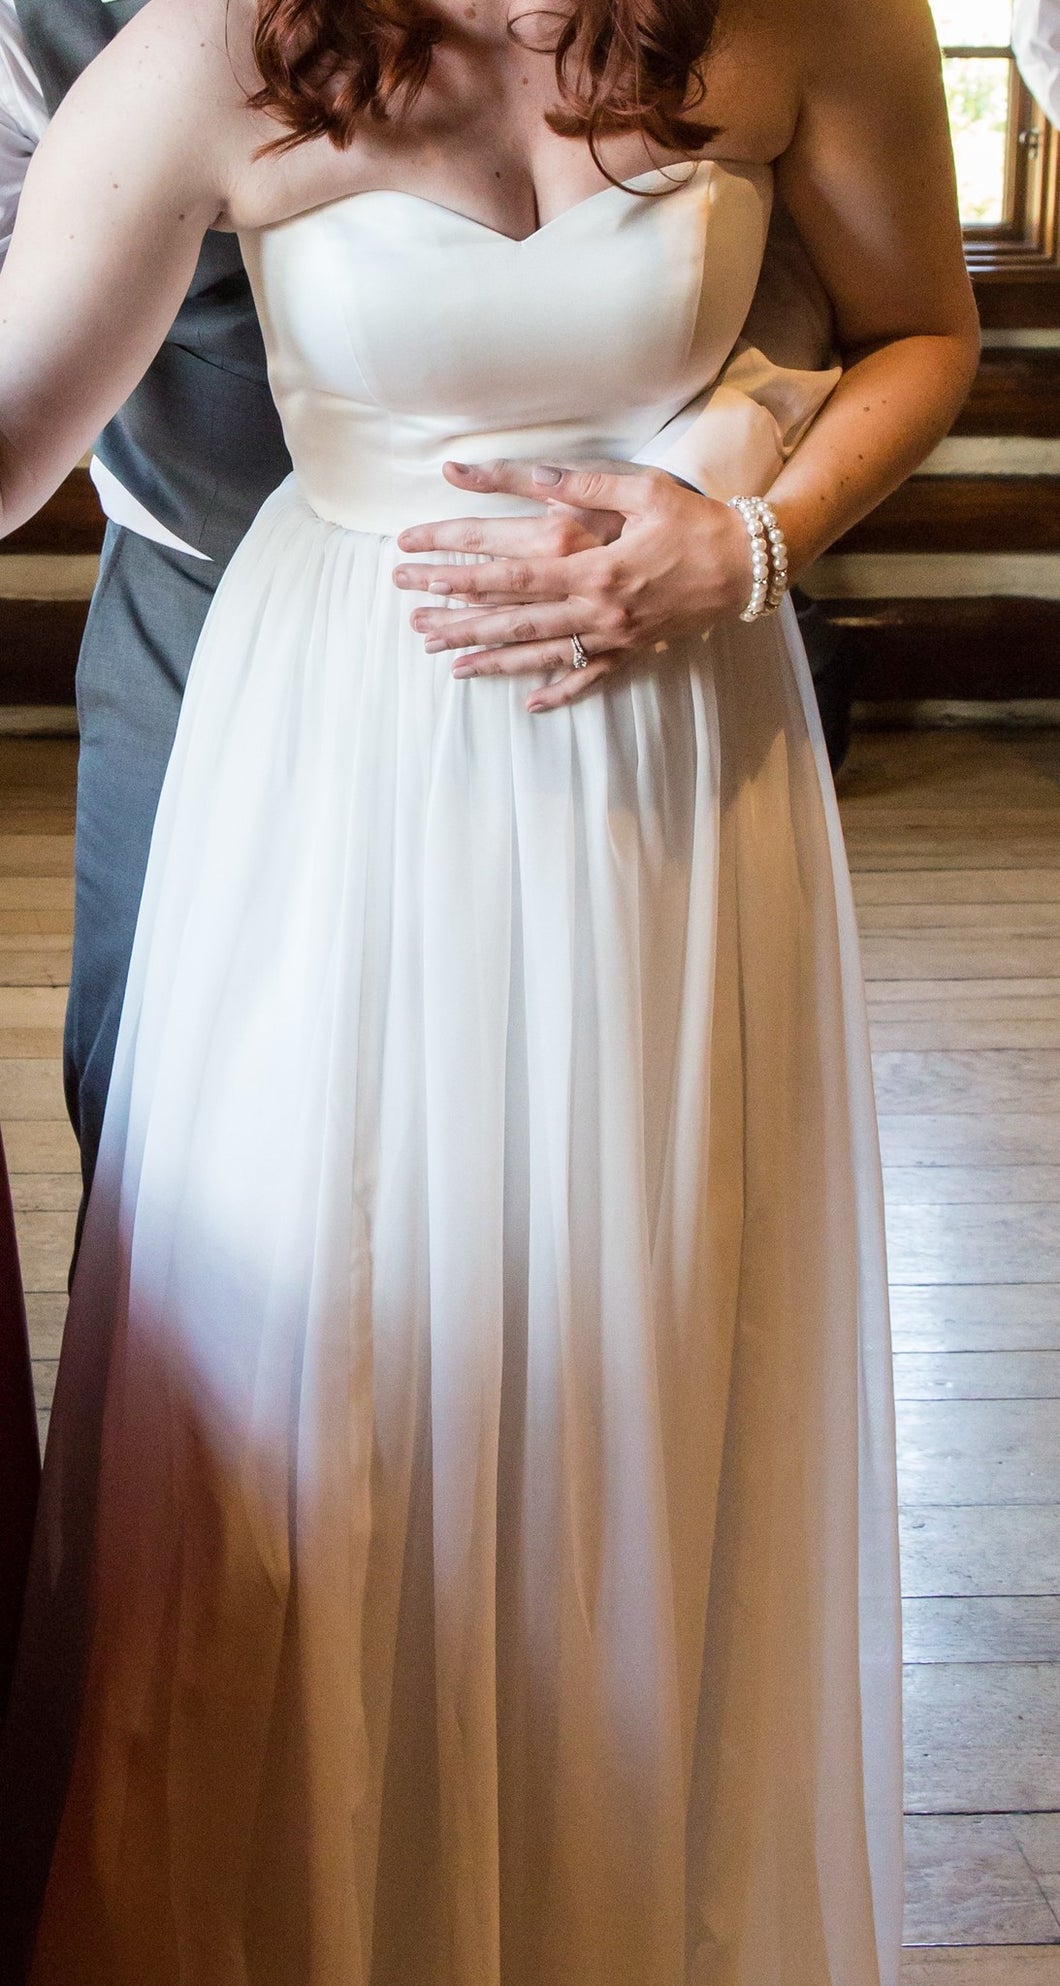 heidi elnora 'Lola Blaire or Alexander McQueen' wedding dress size-06 PREOWNED